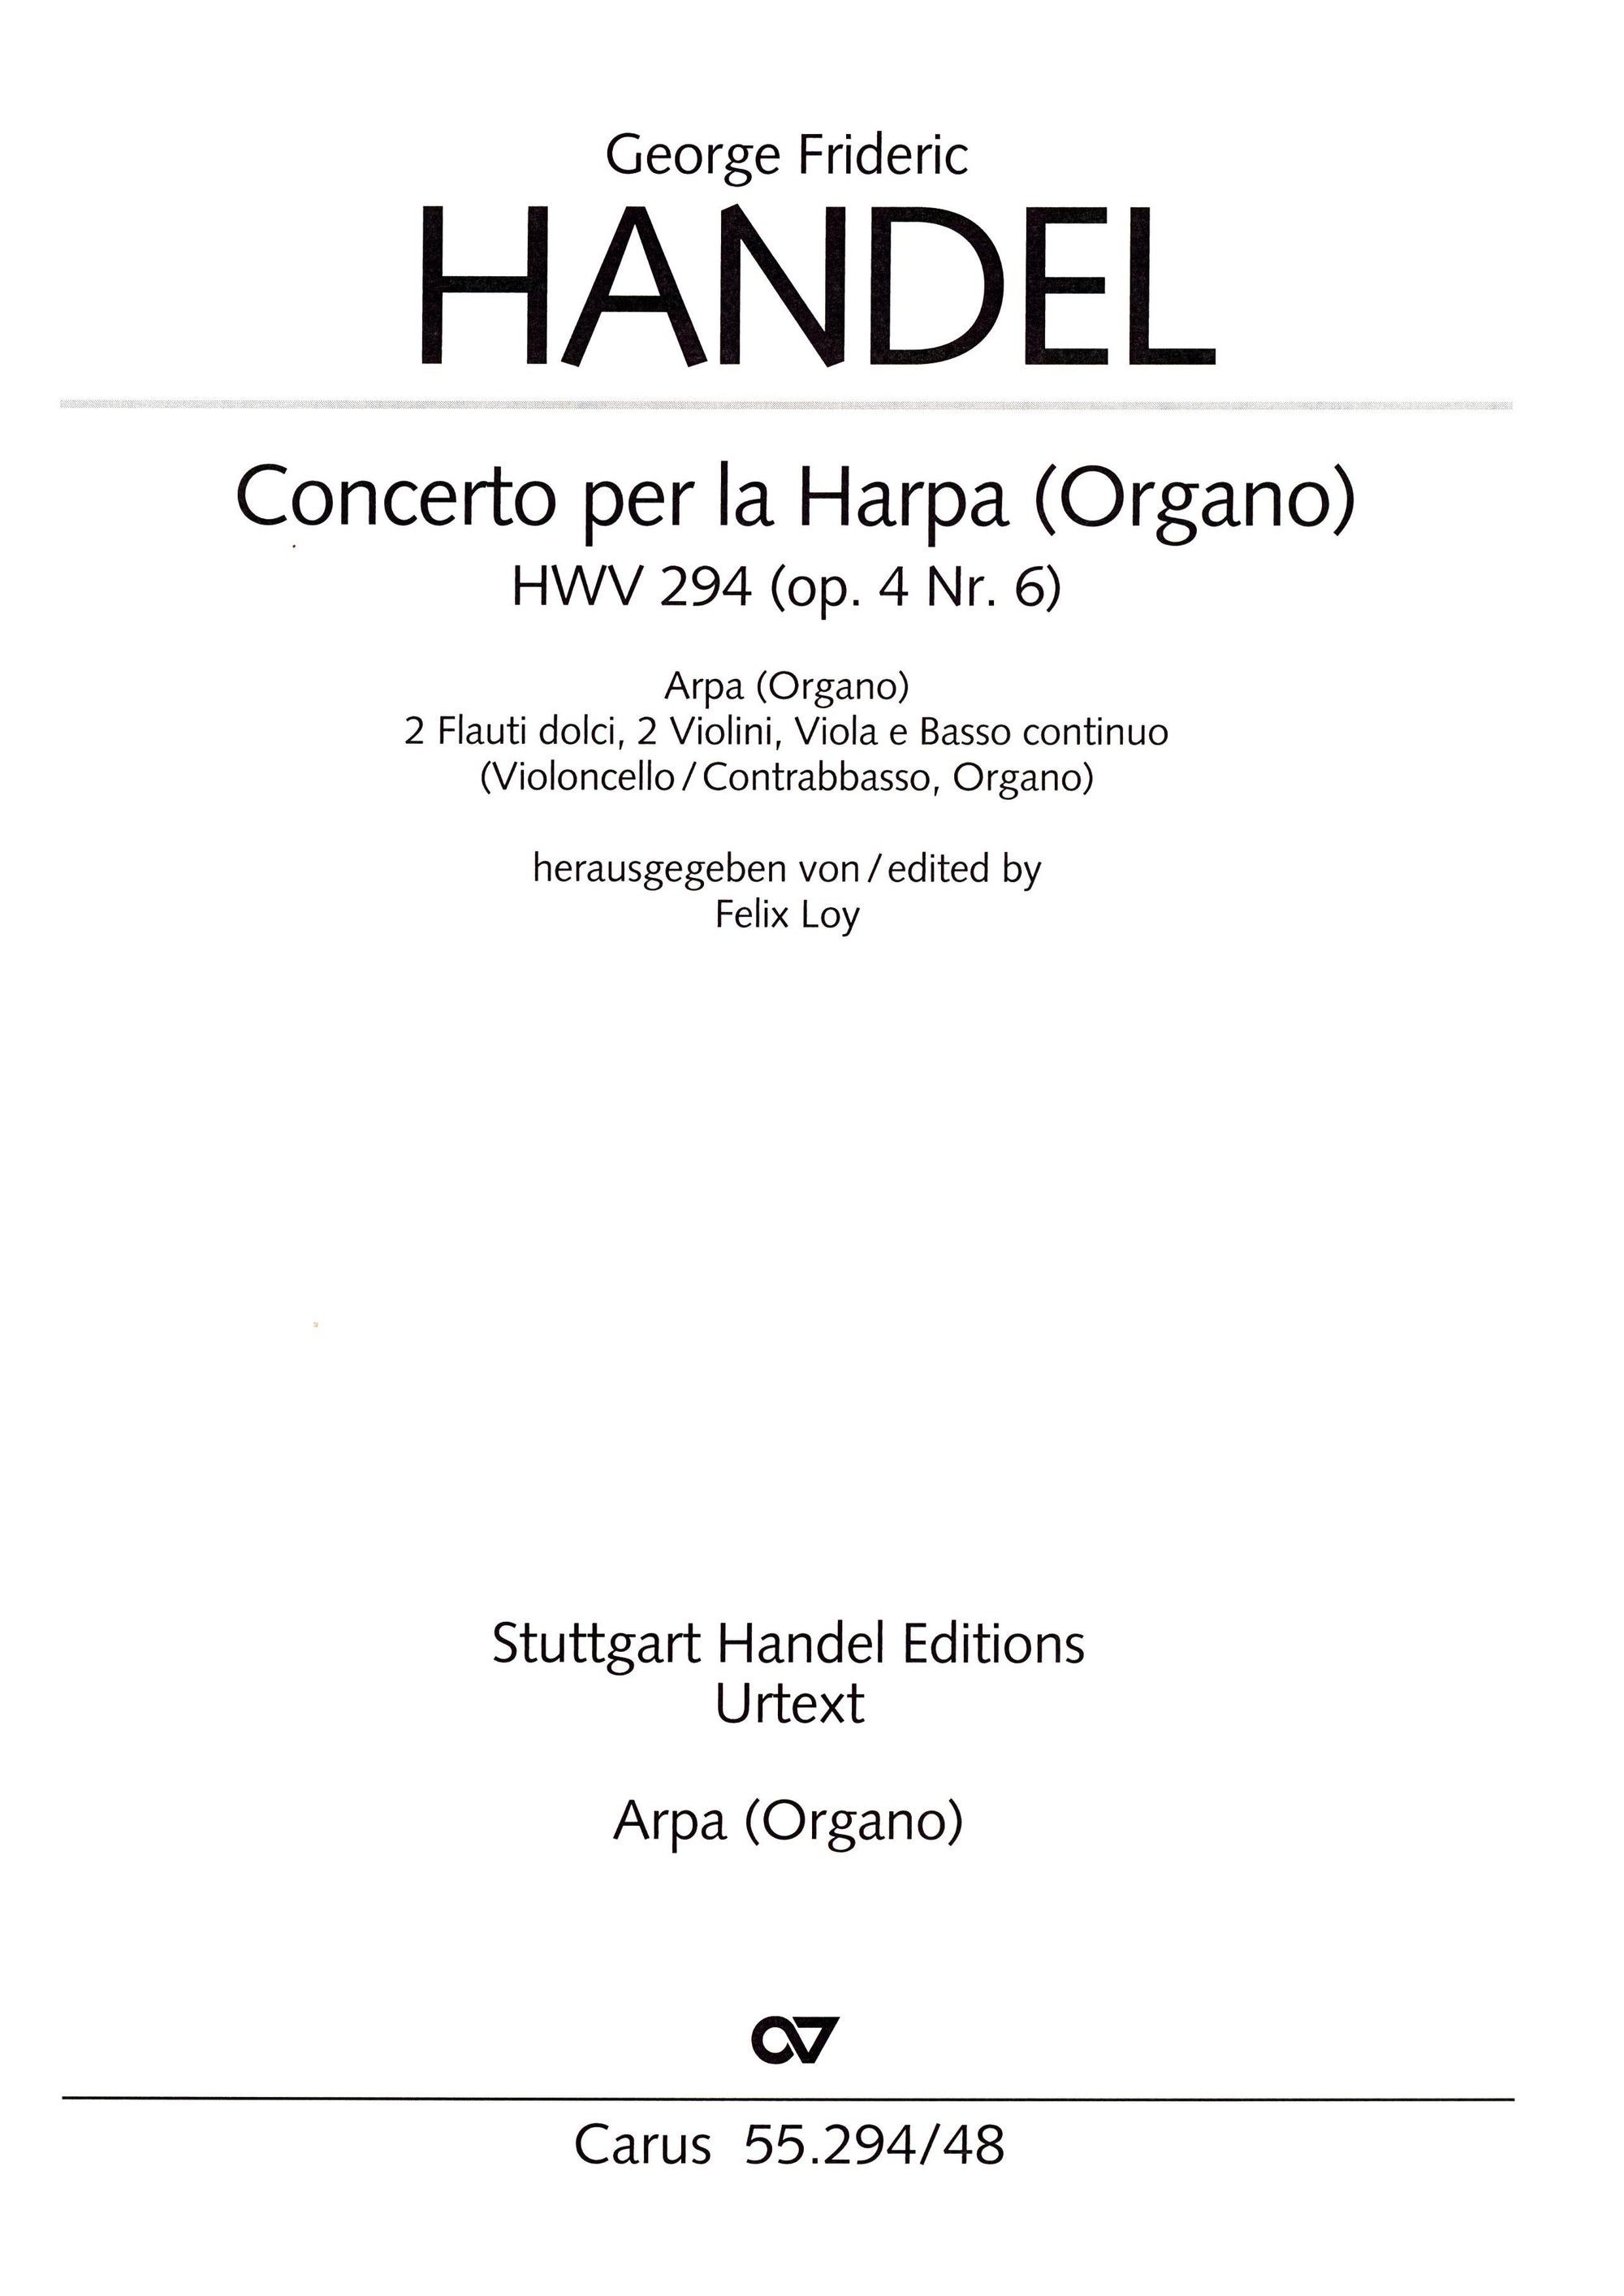 Handel: Harp (Organ) Concerto in B-flat Major, HWV 294, Op. 4, No. 6